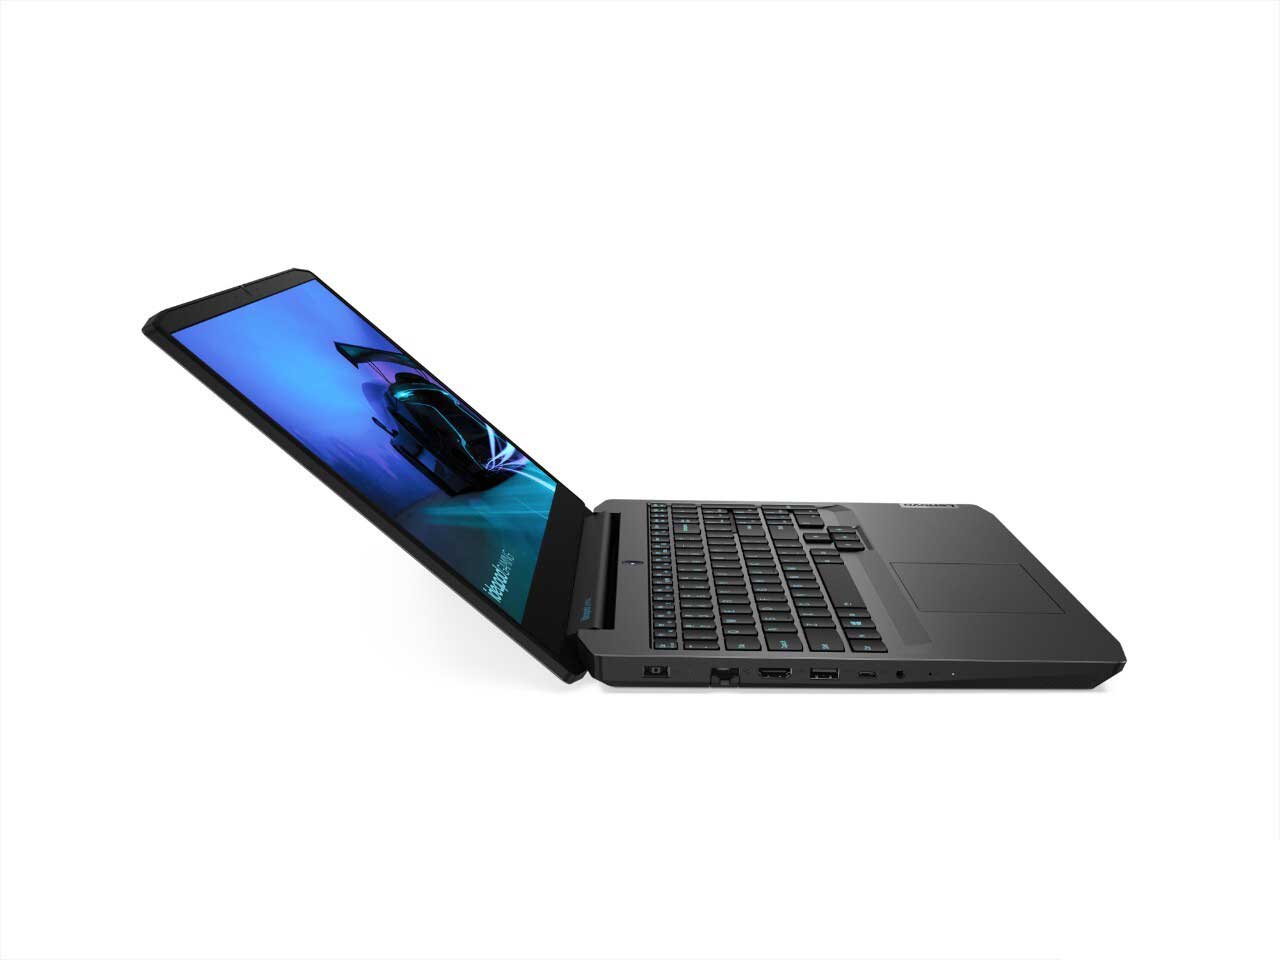 Lenovo IdeaPad Gaming Laptop 3 15IMH05, Intel® Core™ i7-10750H, 10th Generation, 16GB RAM, 256GB SSD + 1TB HDD, NVIDIA® GeForce® GTX 1650 D Ti 4GB GDDR6, 15.6 Inch FHD Screen , black